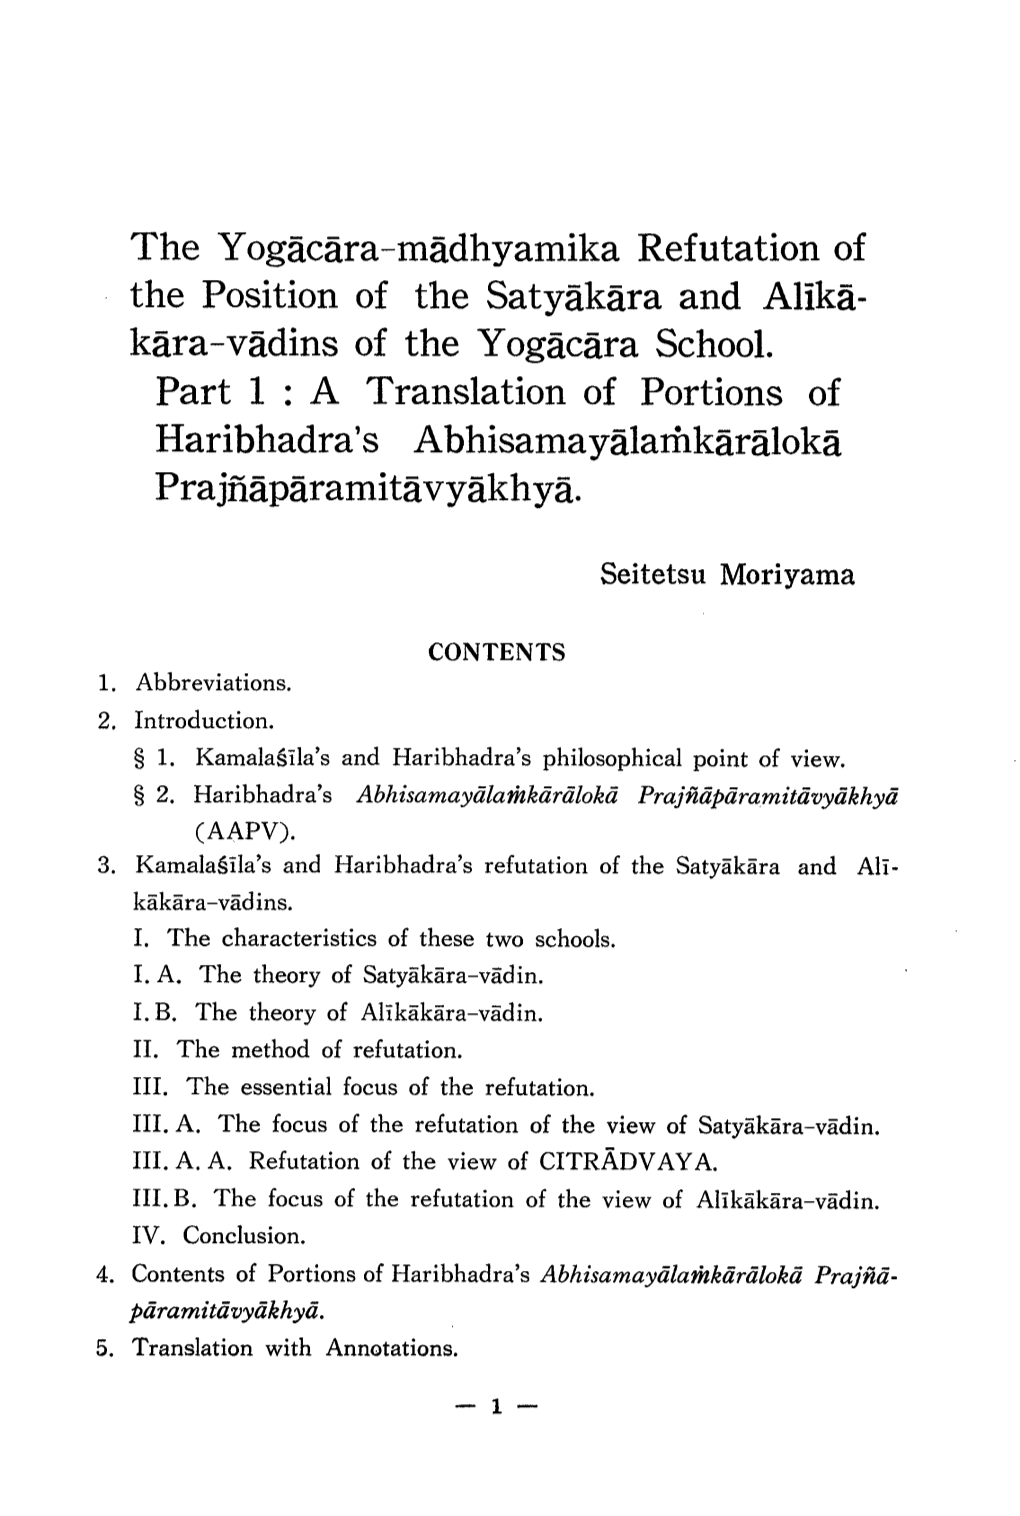 The Yogacara-Madhyamika Refutation of the Position of the Satyakara and Alika- Kara-Vadins of the Yogacara School